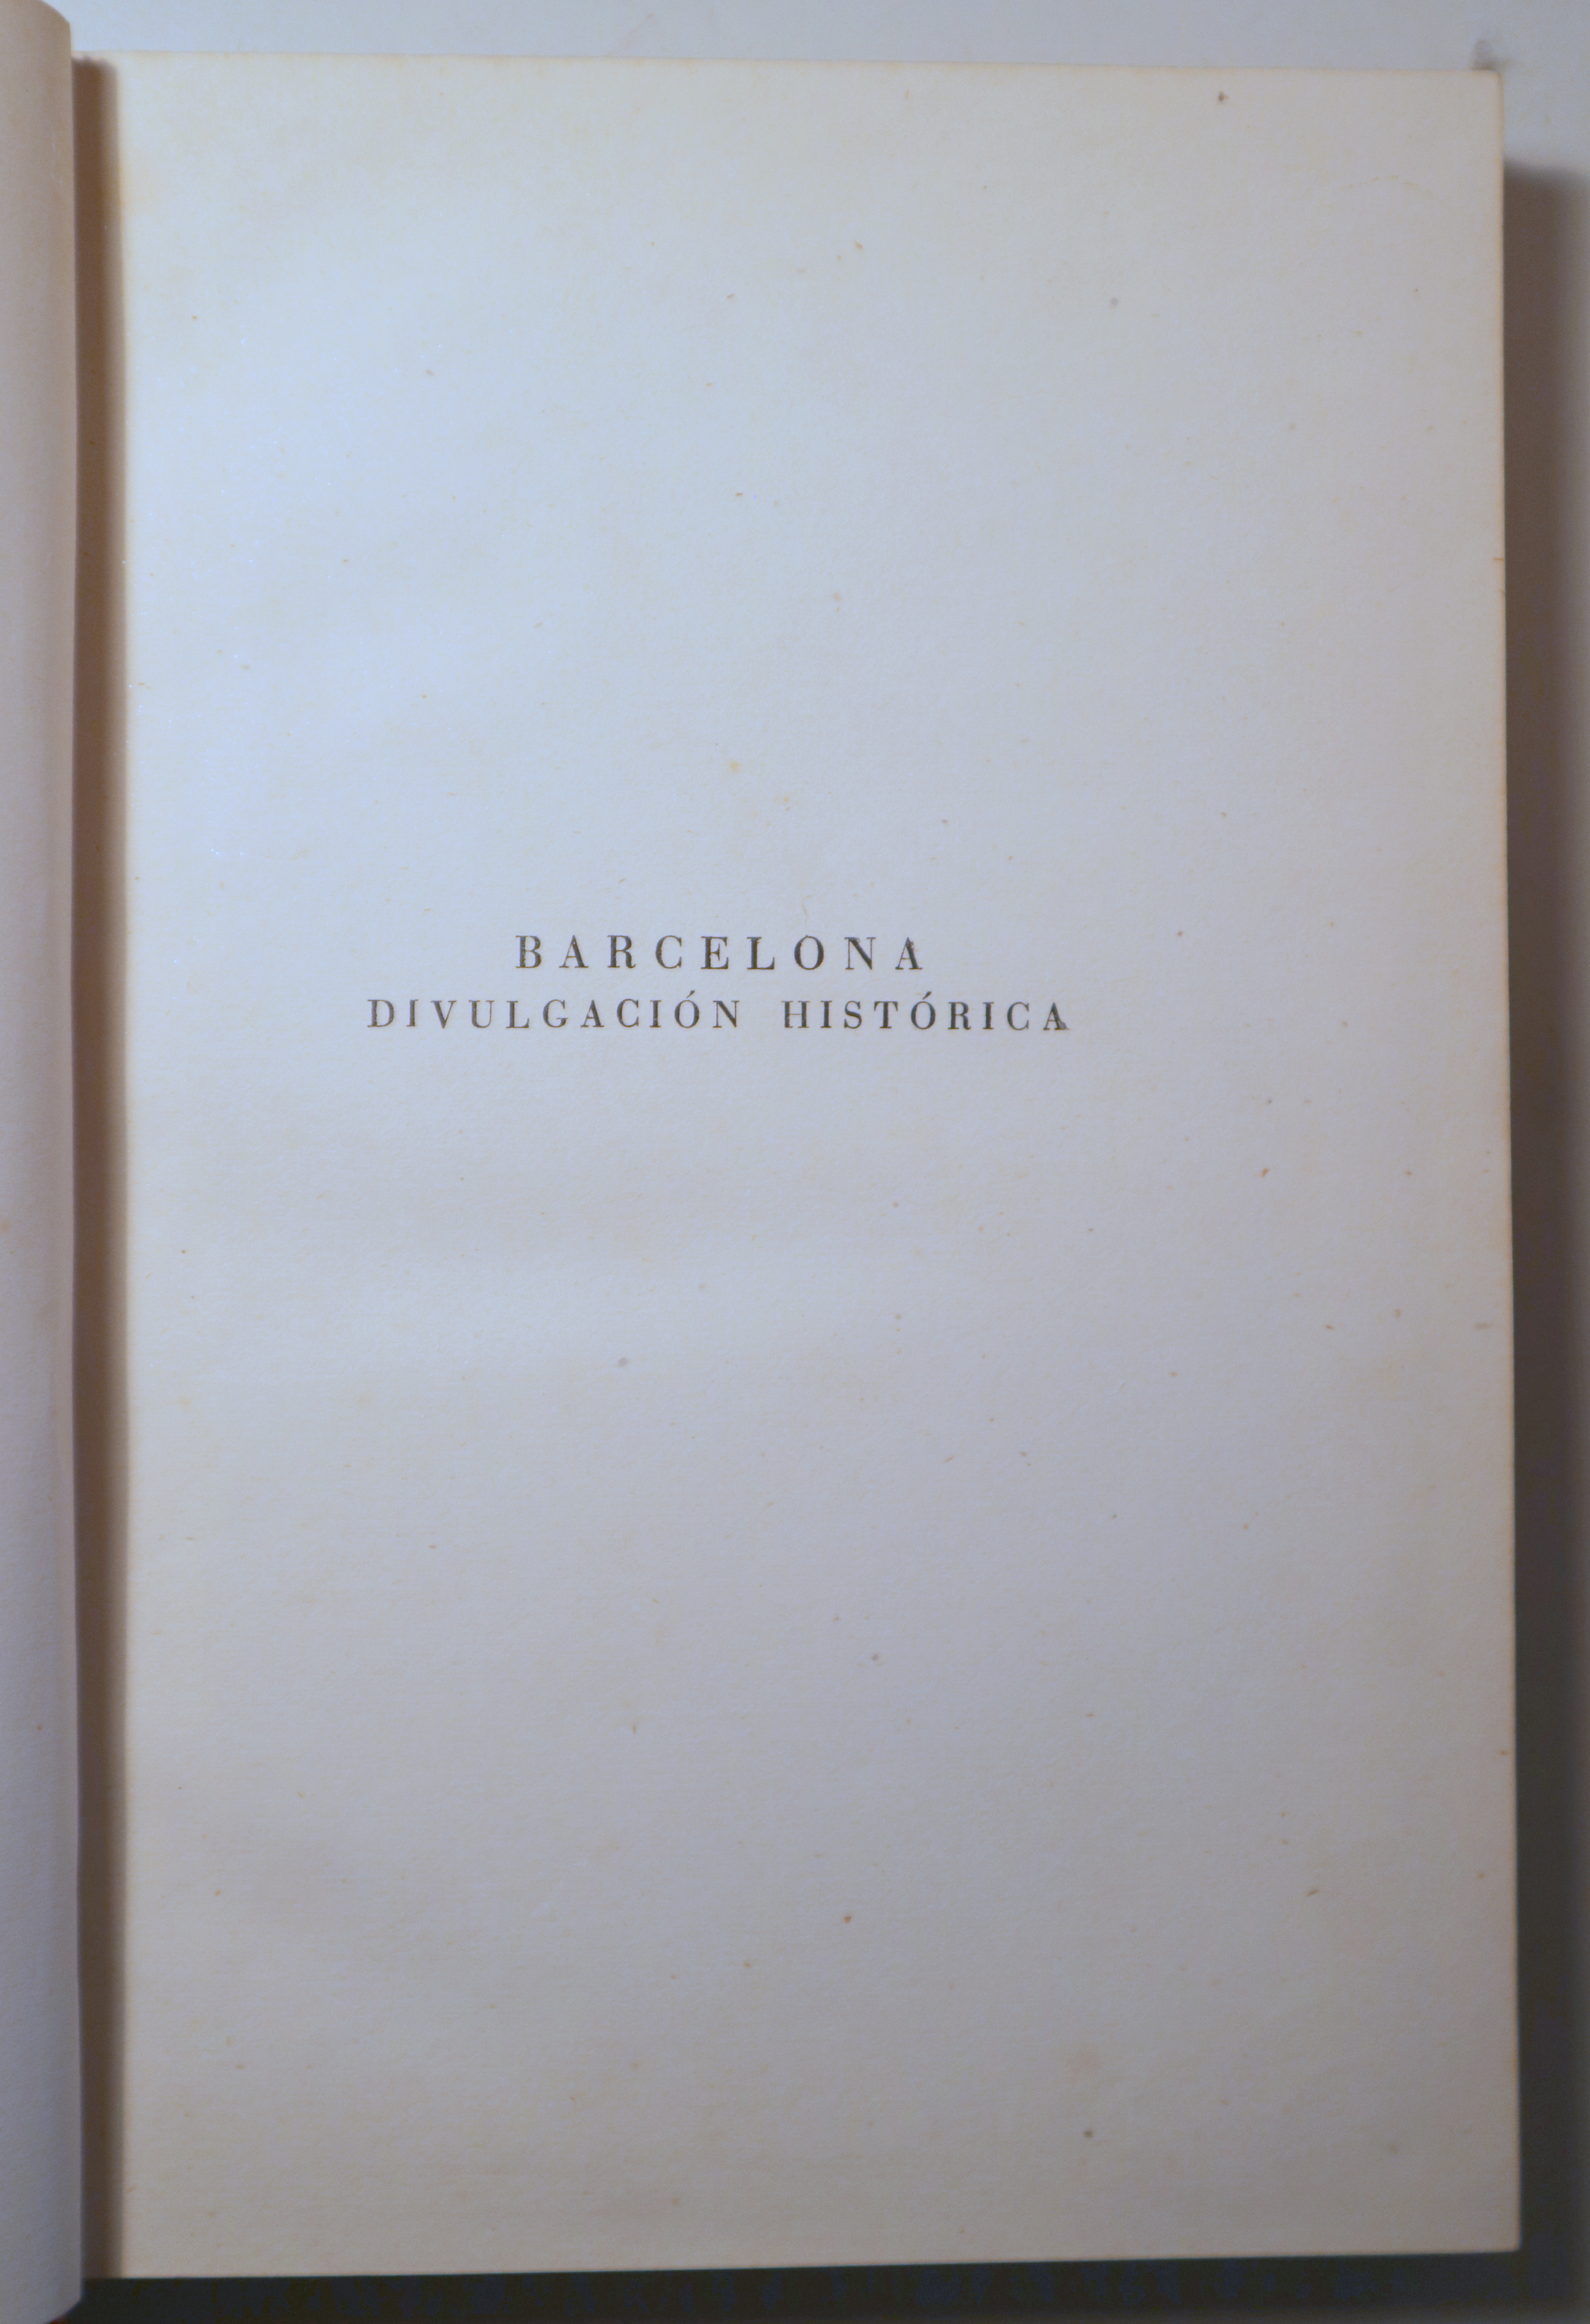 BARCELONA DIVULGACÓN HISTÓRICA ( Tomo VII) - Barcelona 1950 - Ilustrado